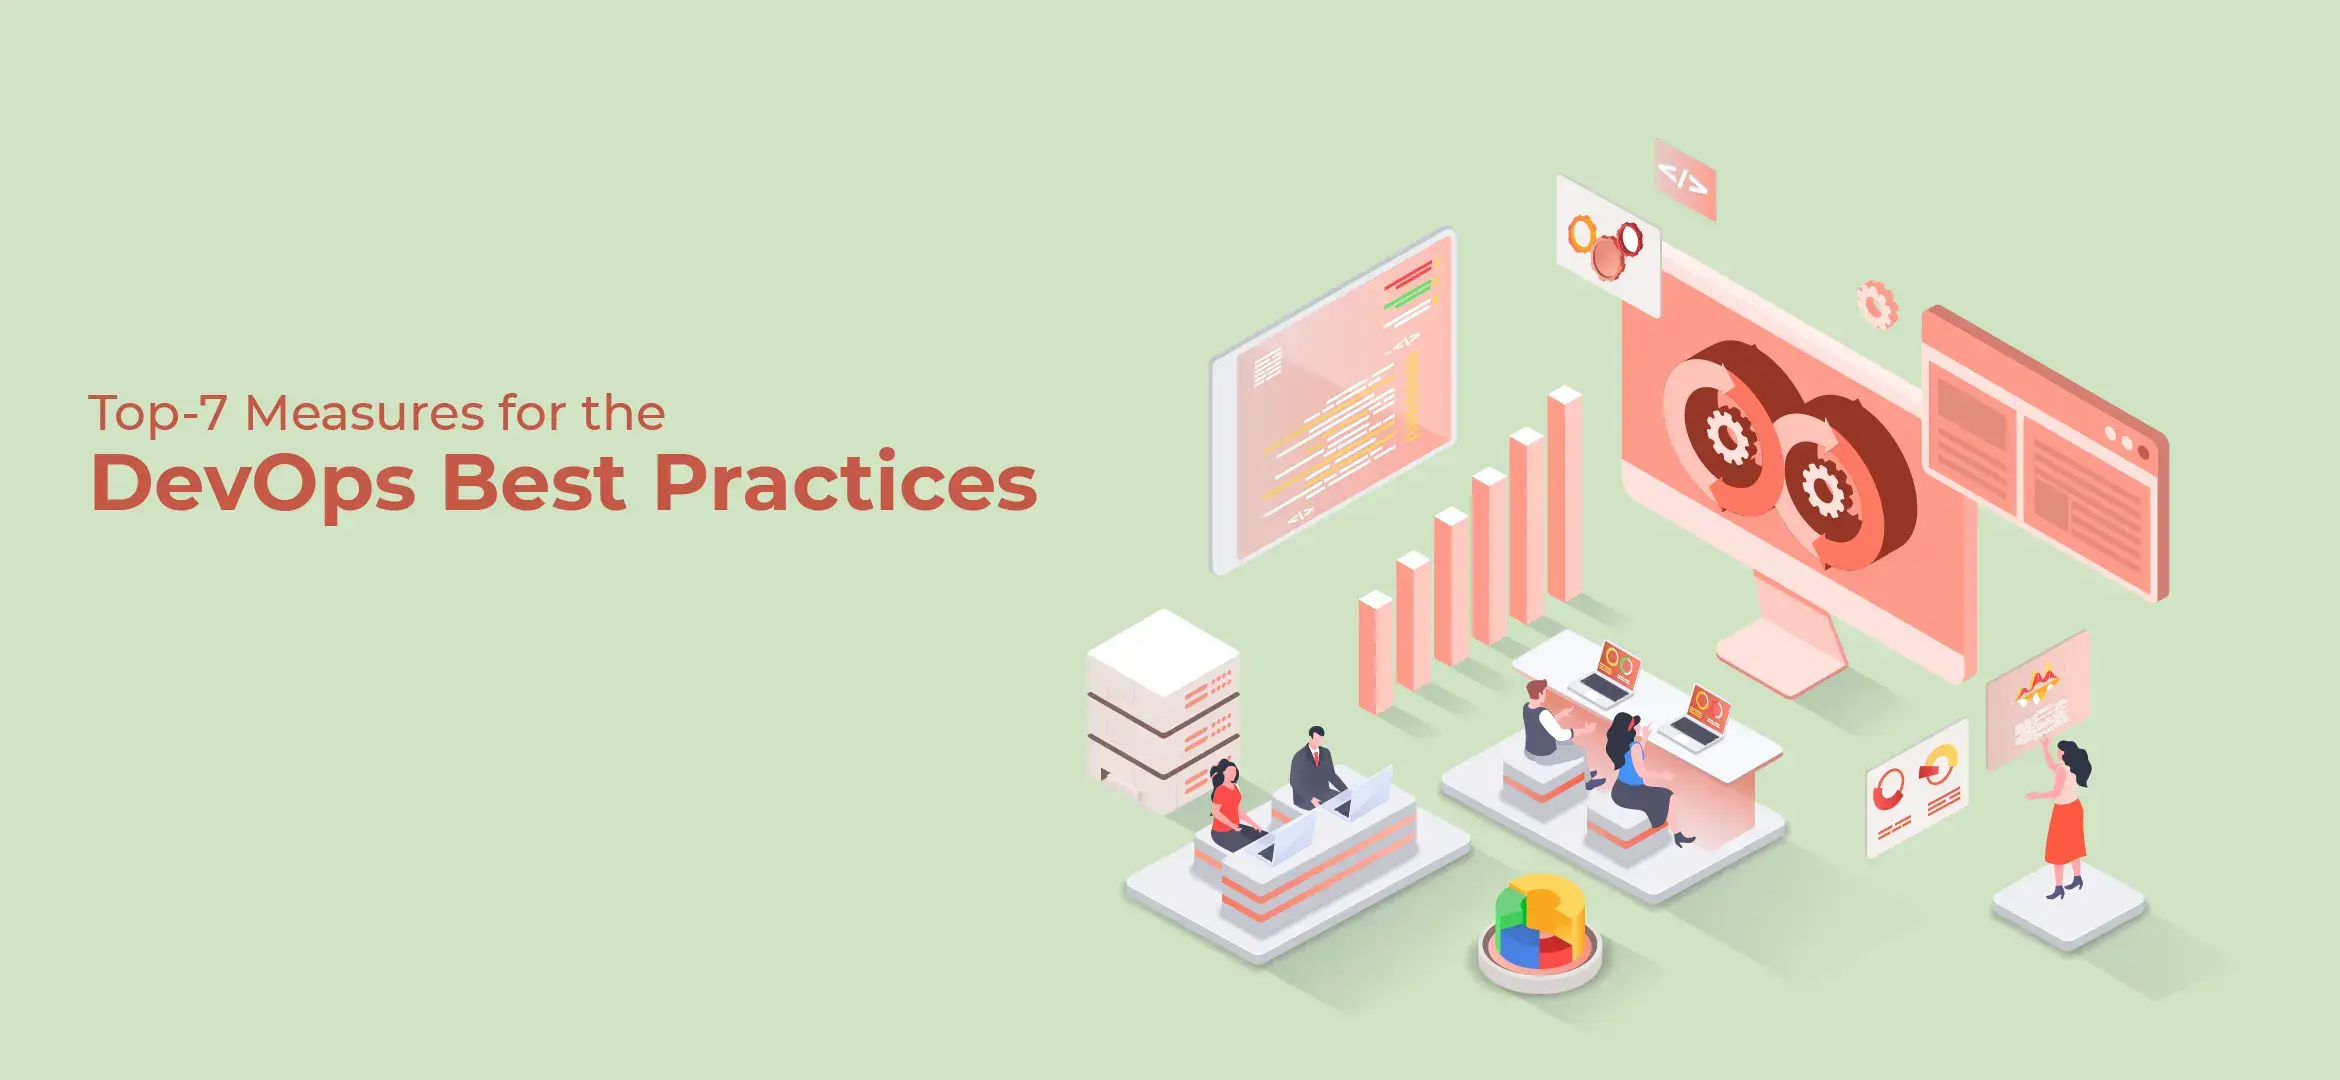 Top-7 Measures for the DevOps Best Practices